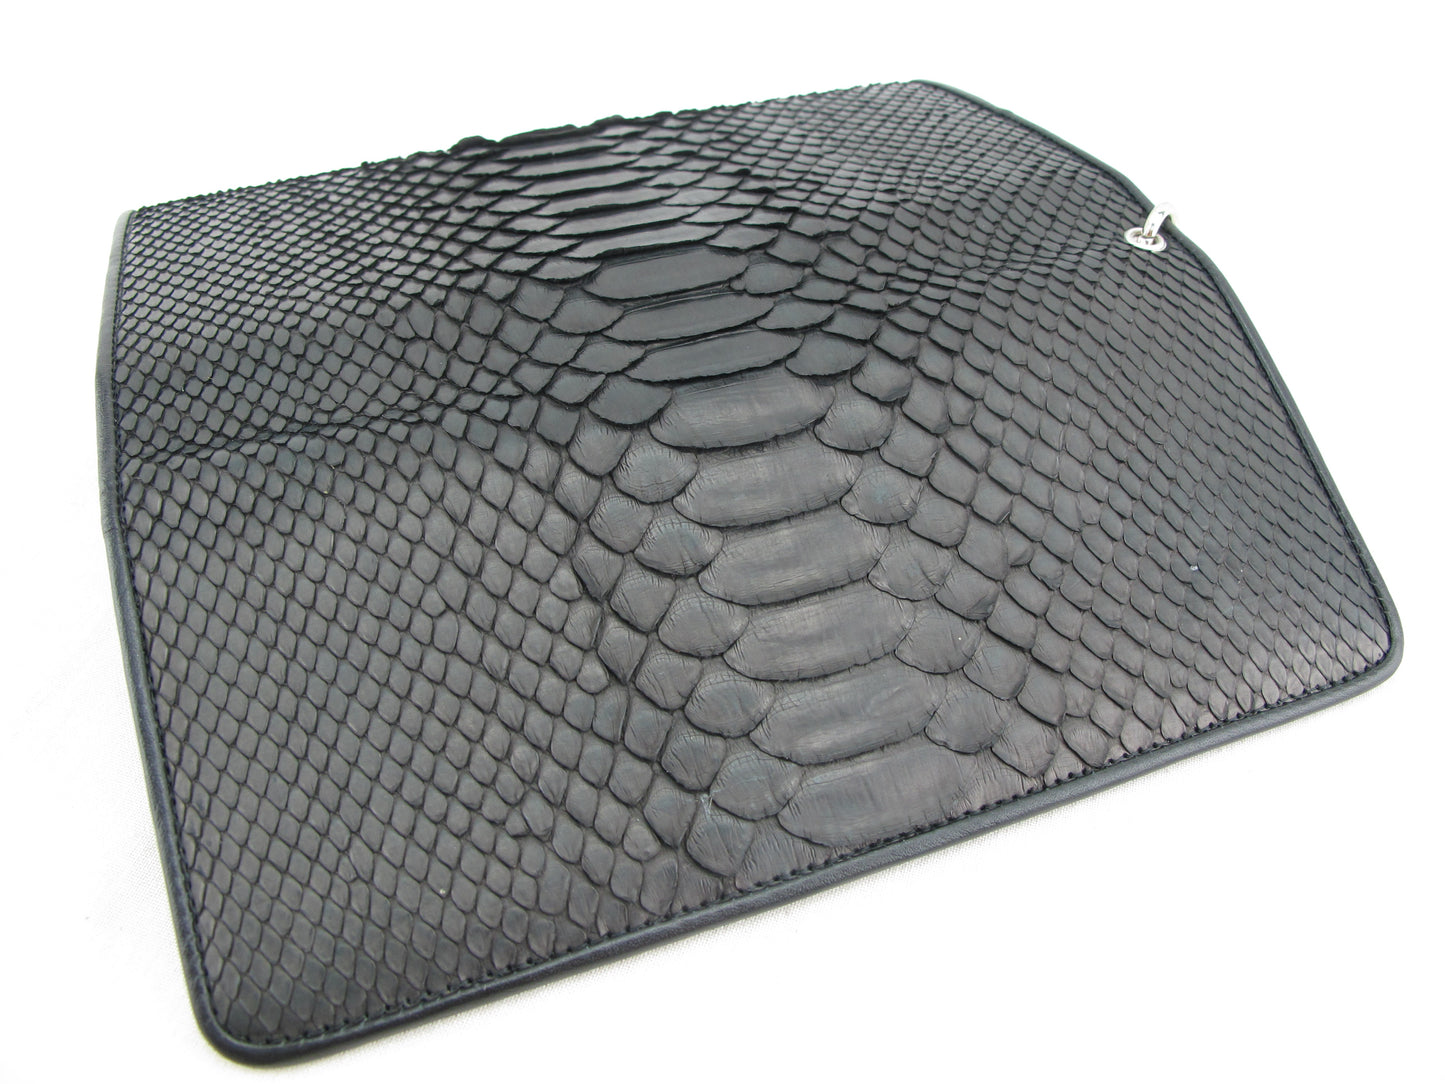 Genuine Python Snake Belly Skin Leather Women's Clutch Wallet Wristlet Purse